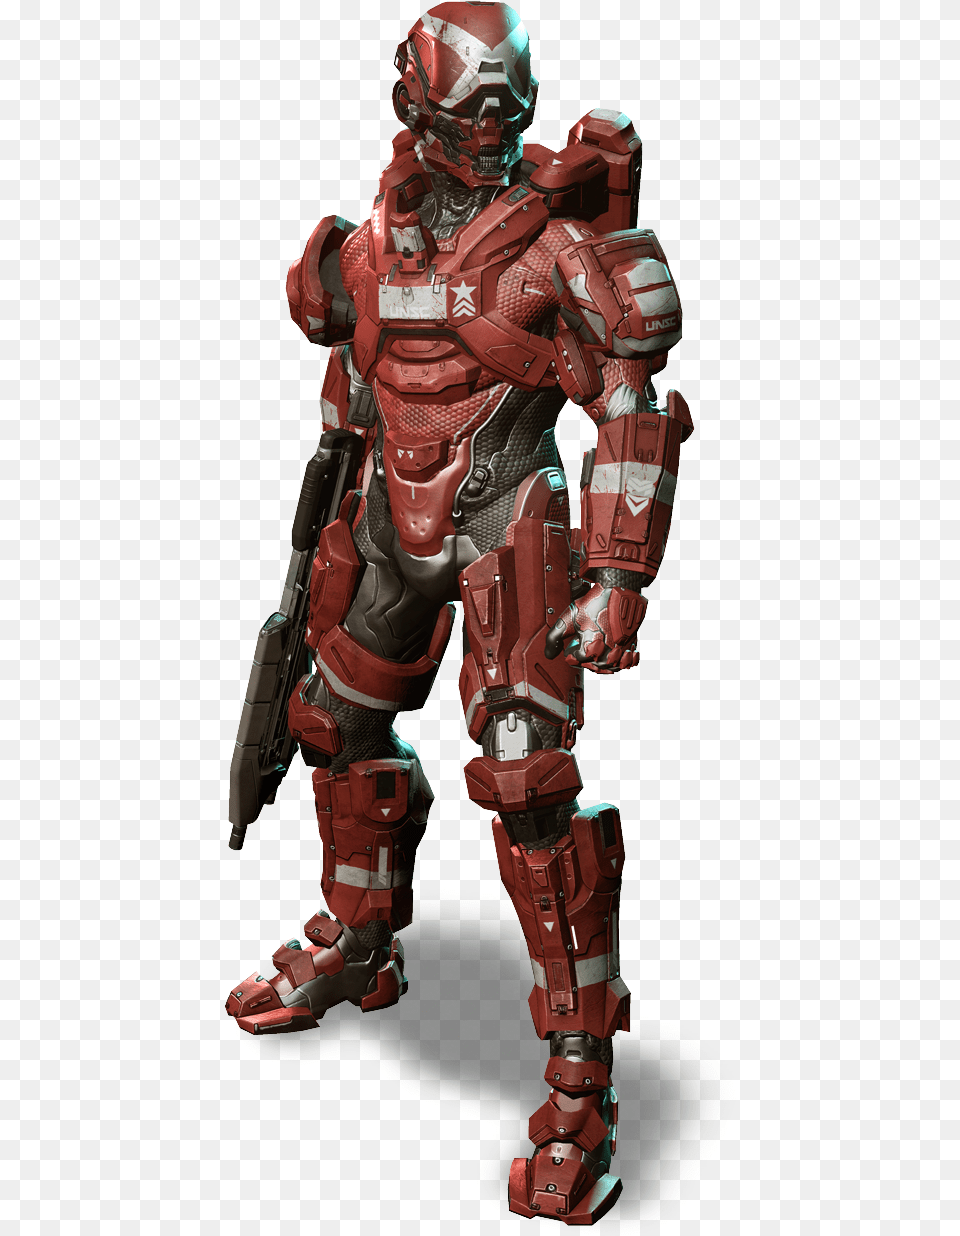 Mjolnir Locus Halo 4 Spartan Warmaster, Toy, Helmet, Armor, Robot Free Transparent Png